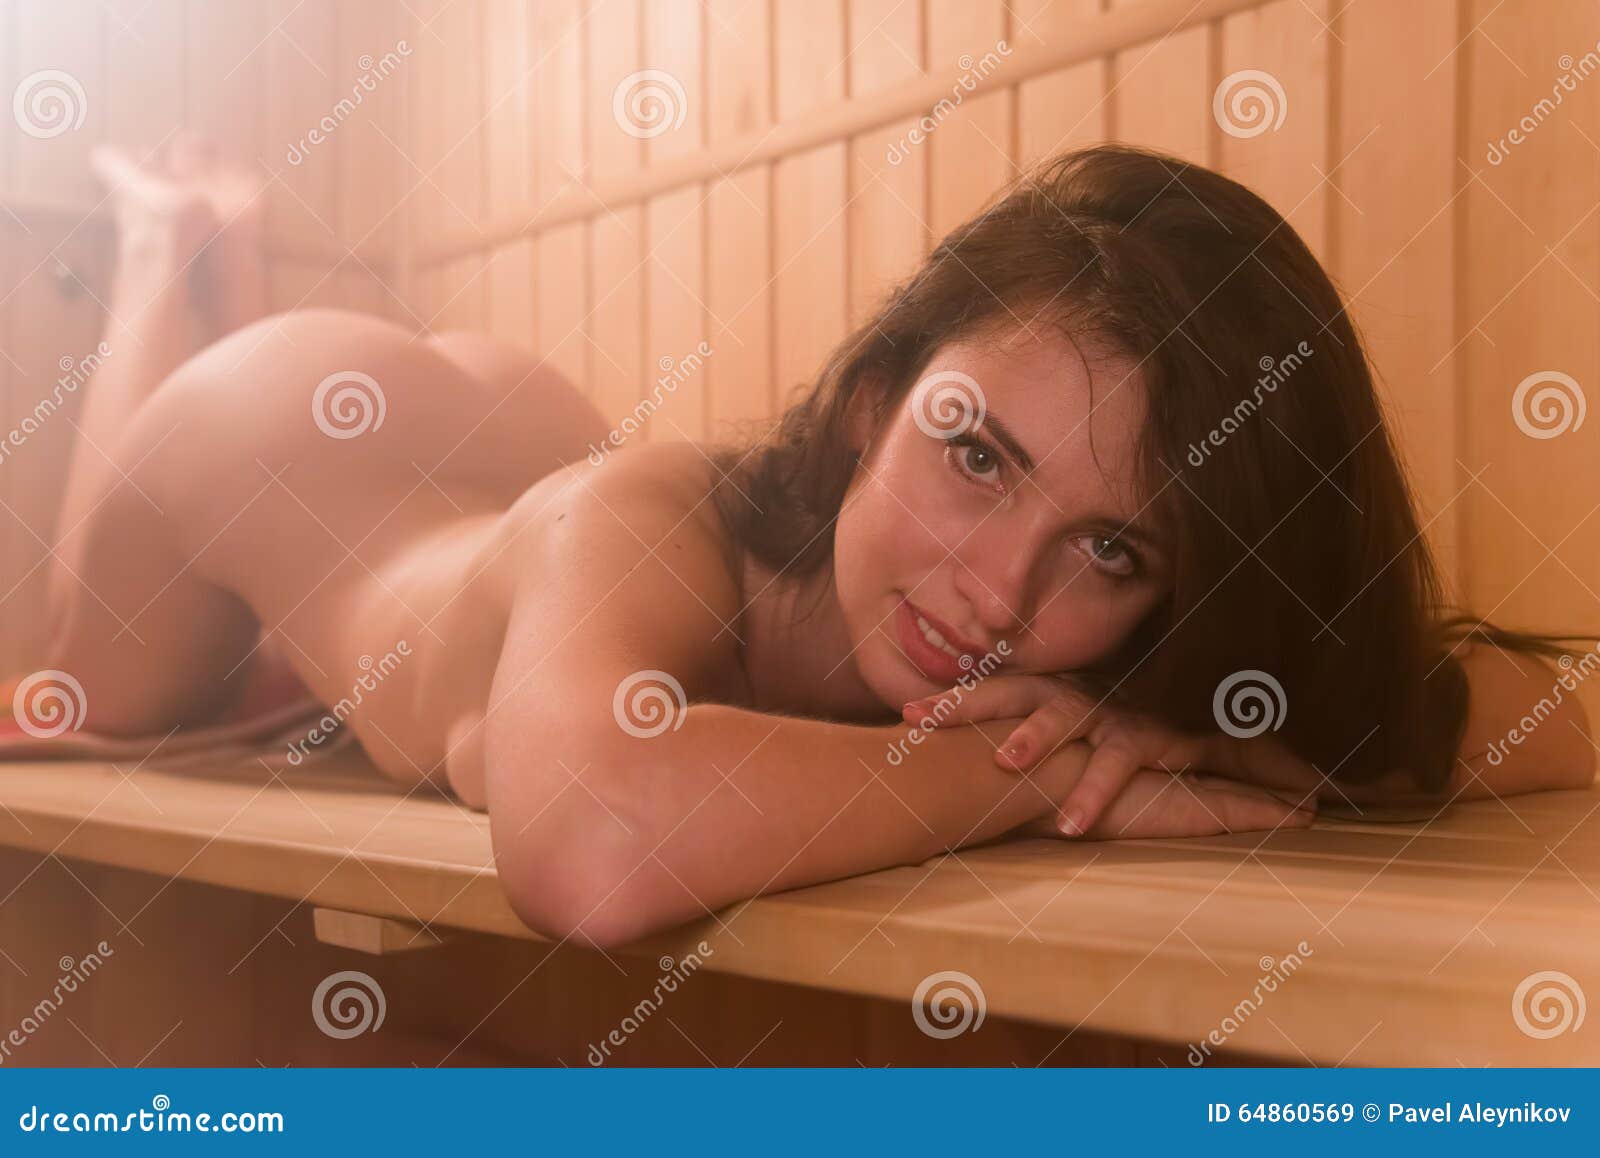 Nude women sauna